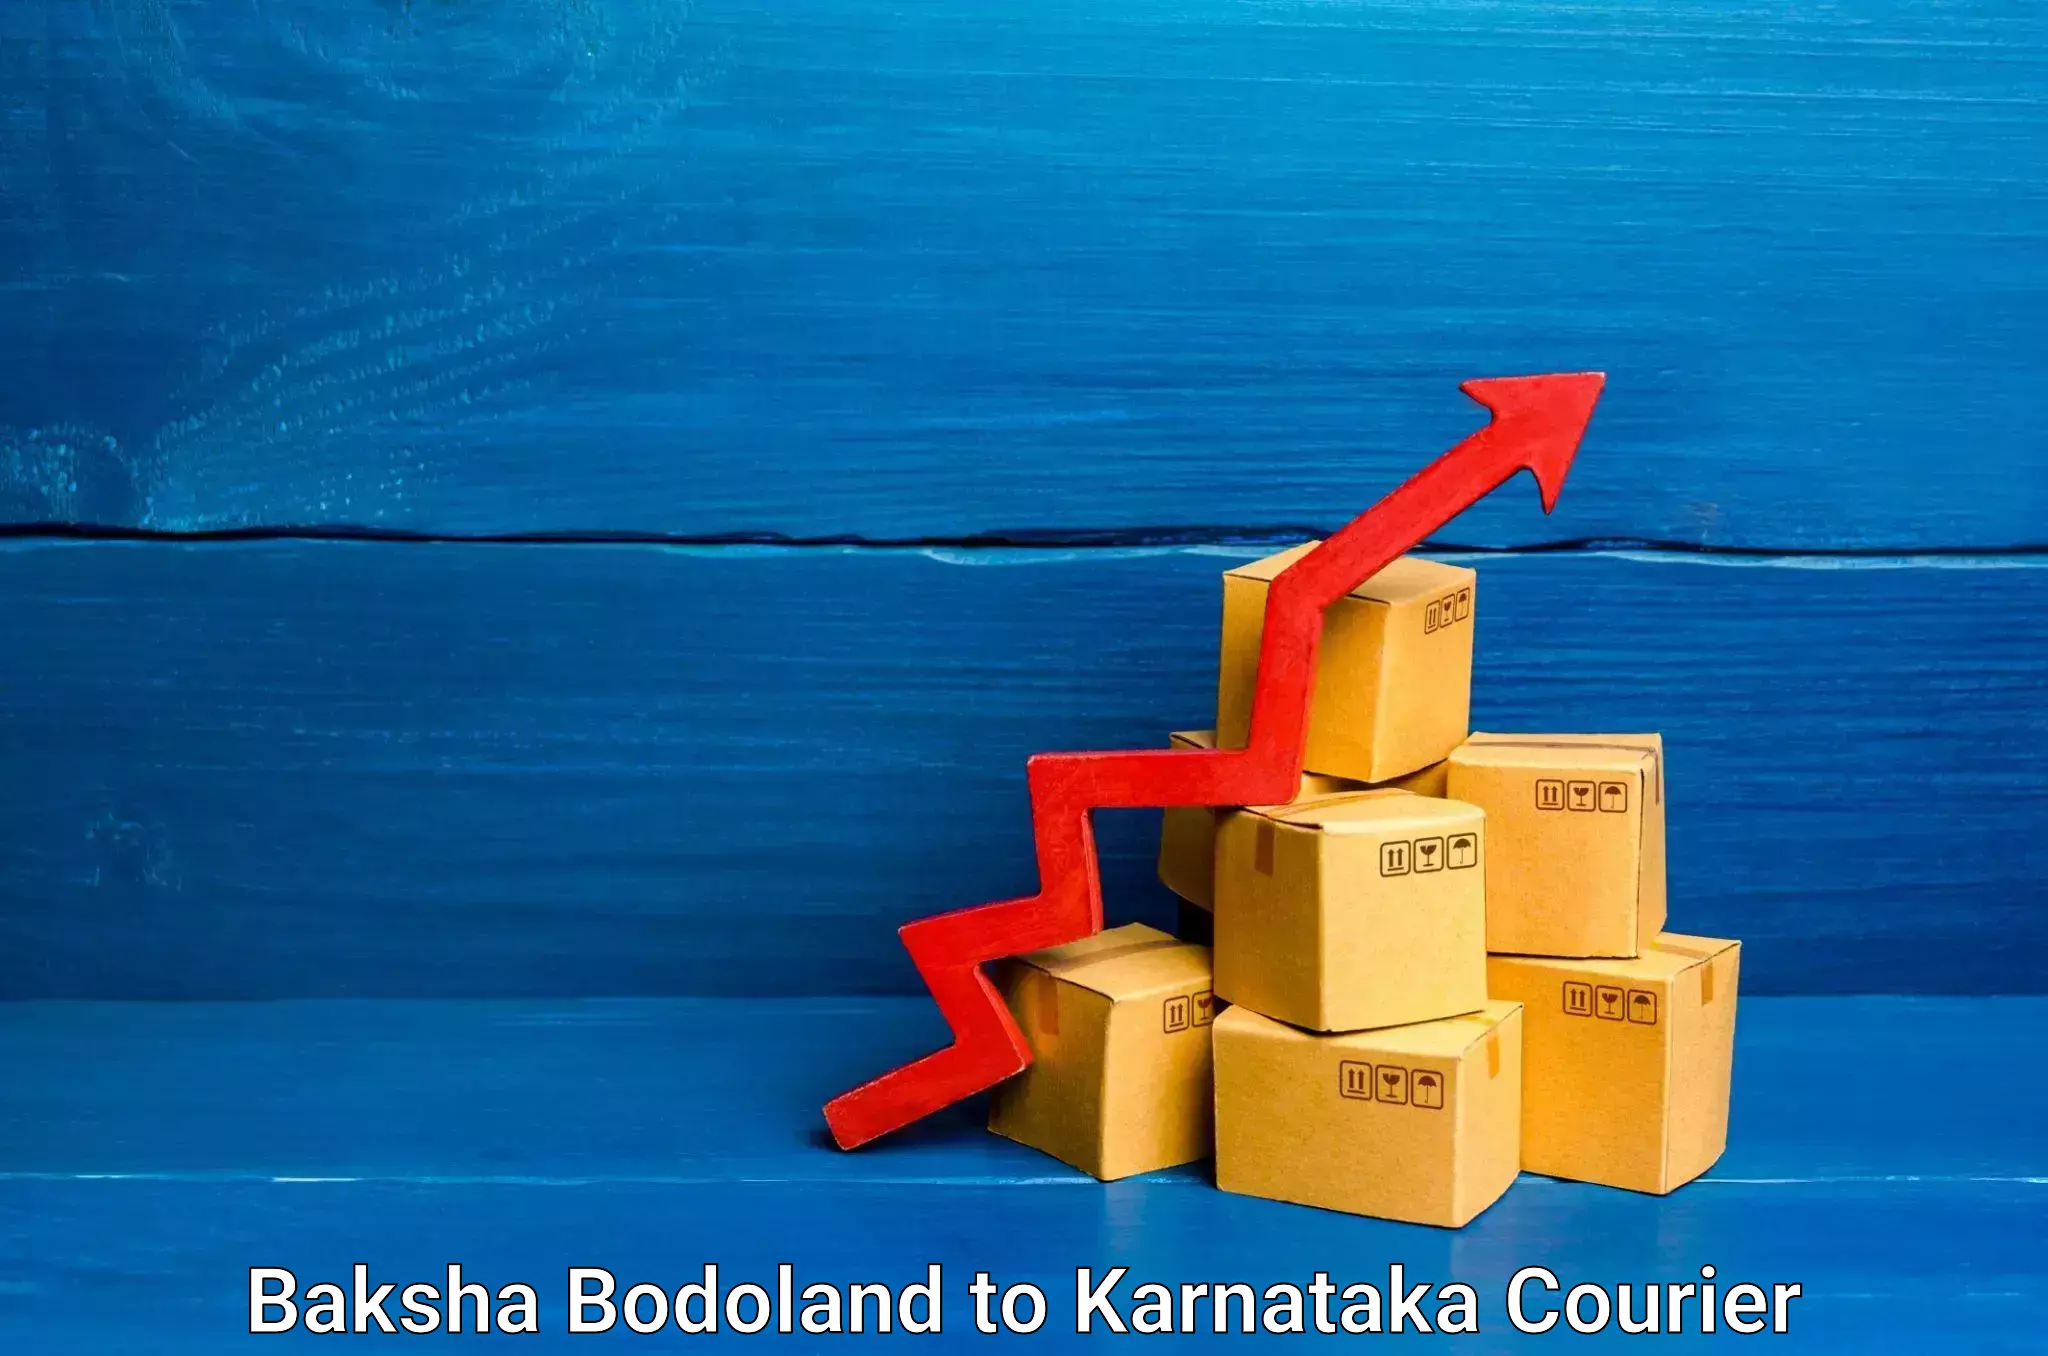 Efficient cargo handling Baksha Bodoland to Karnataka